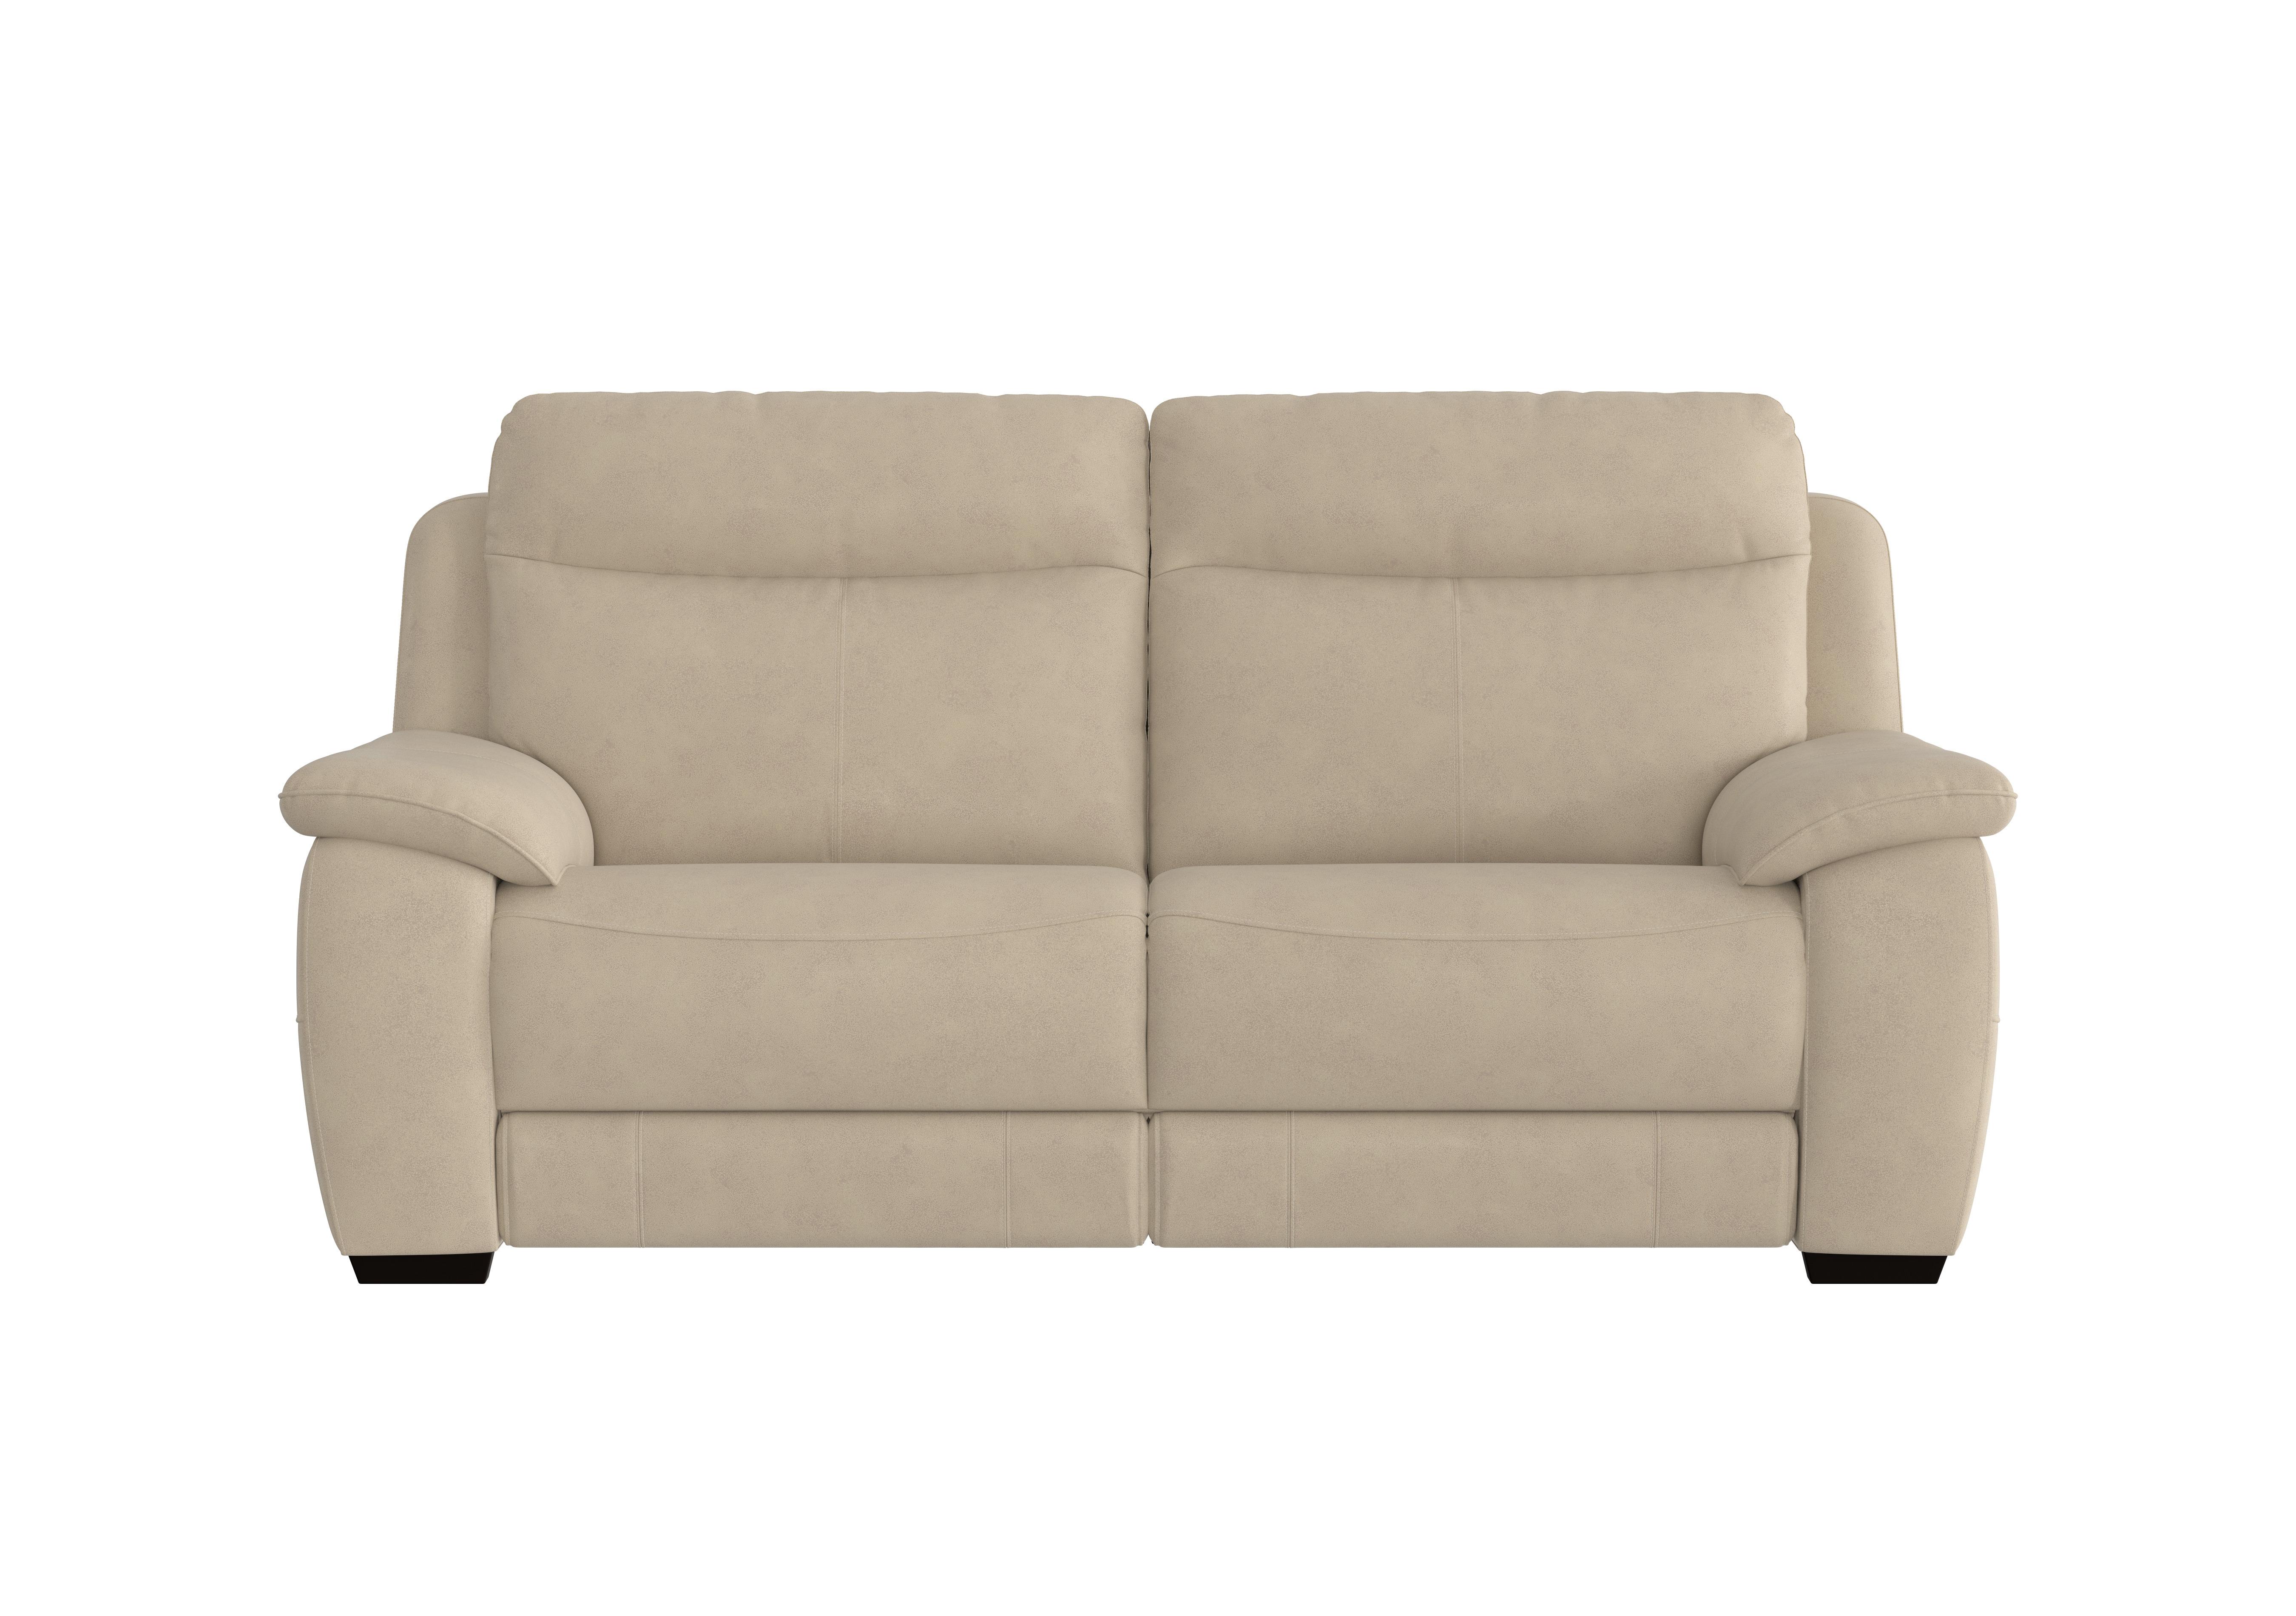 Starlight Express 3 Seater Fabric Sofa in Bfa-Raf-R20 Oatmeal on Furniture Village